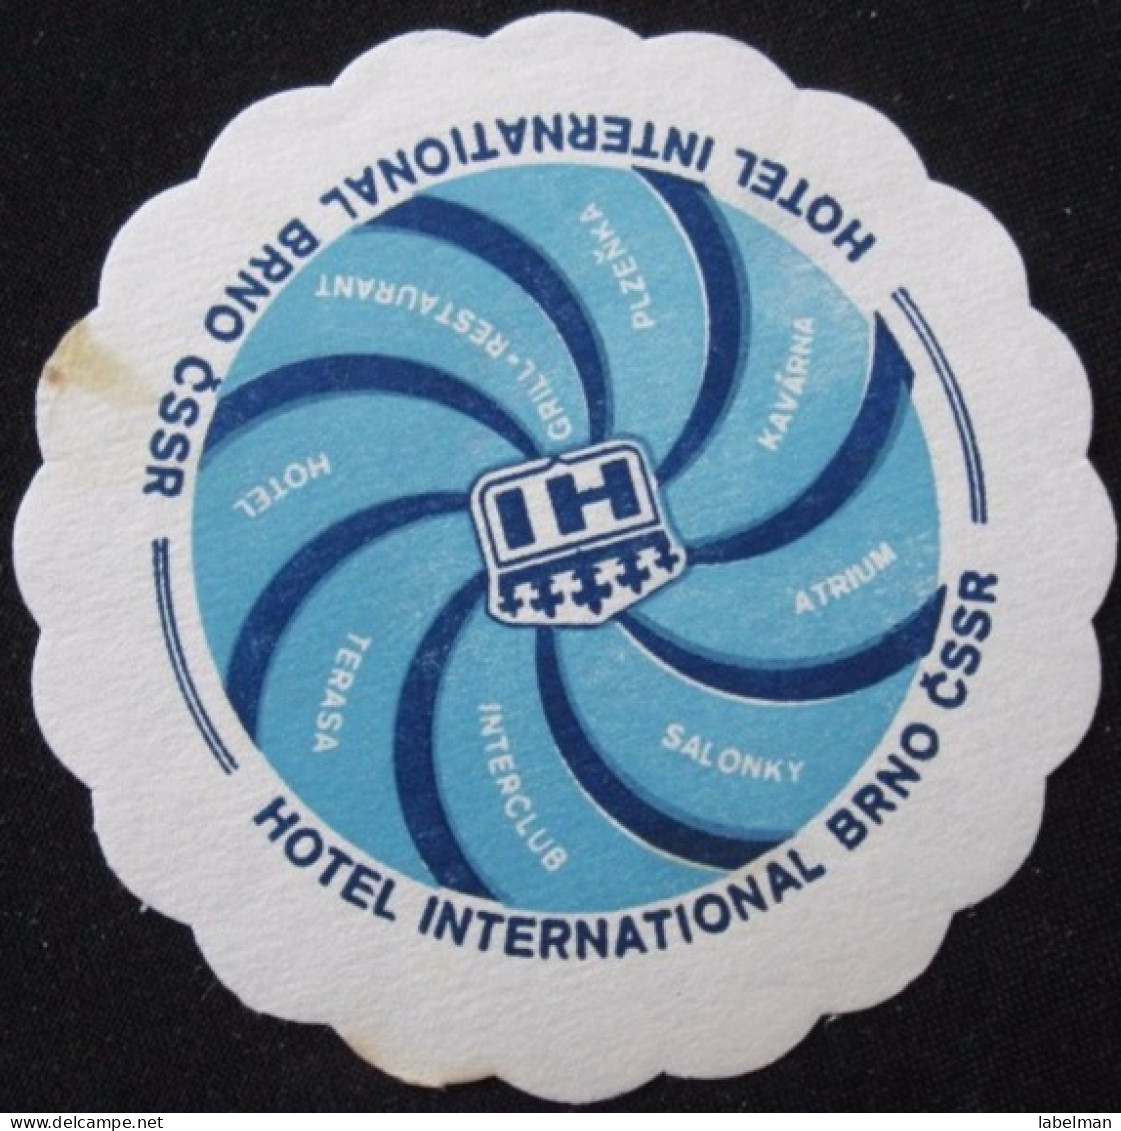 HOTEL MOTEL INN INTERNATIONAL BRNO CSSR CZECH REPUBLIC CZECHOSLOVAKIA LUGGAGE LABEL ETIQUETTE AUFKLEBER DECAL STICKER - Hotel Labels